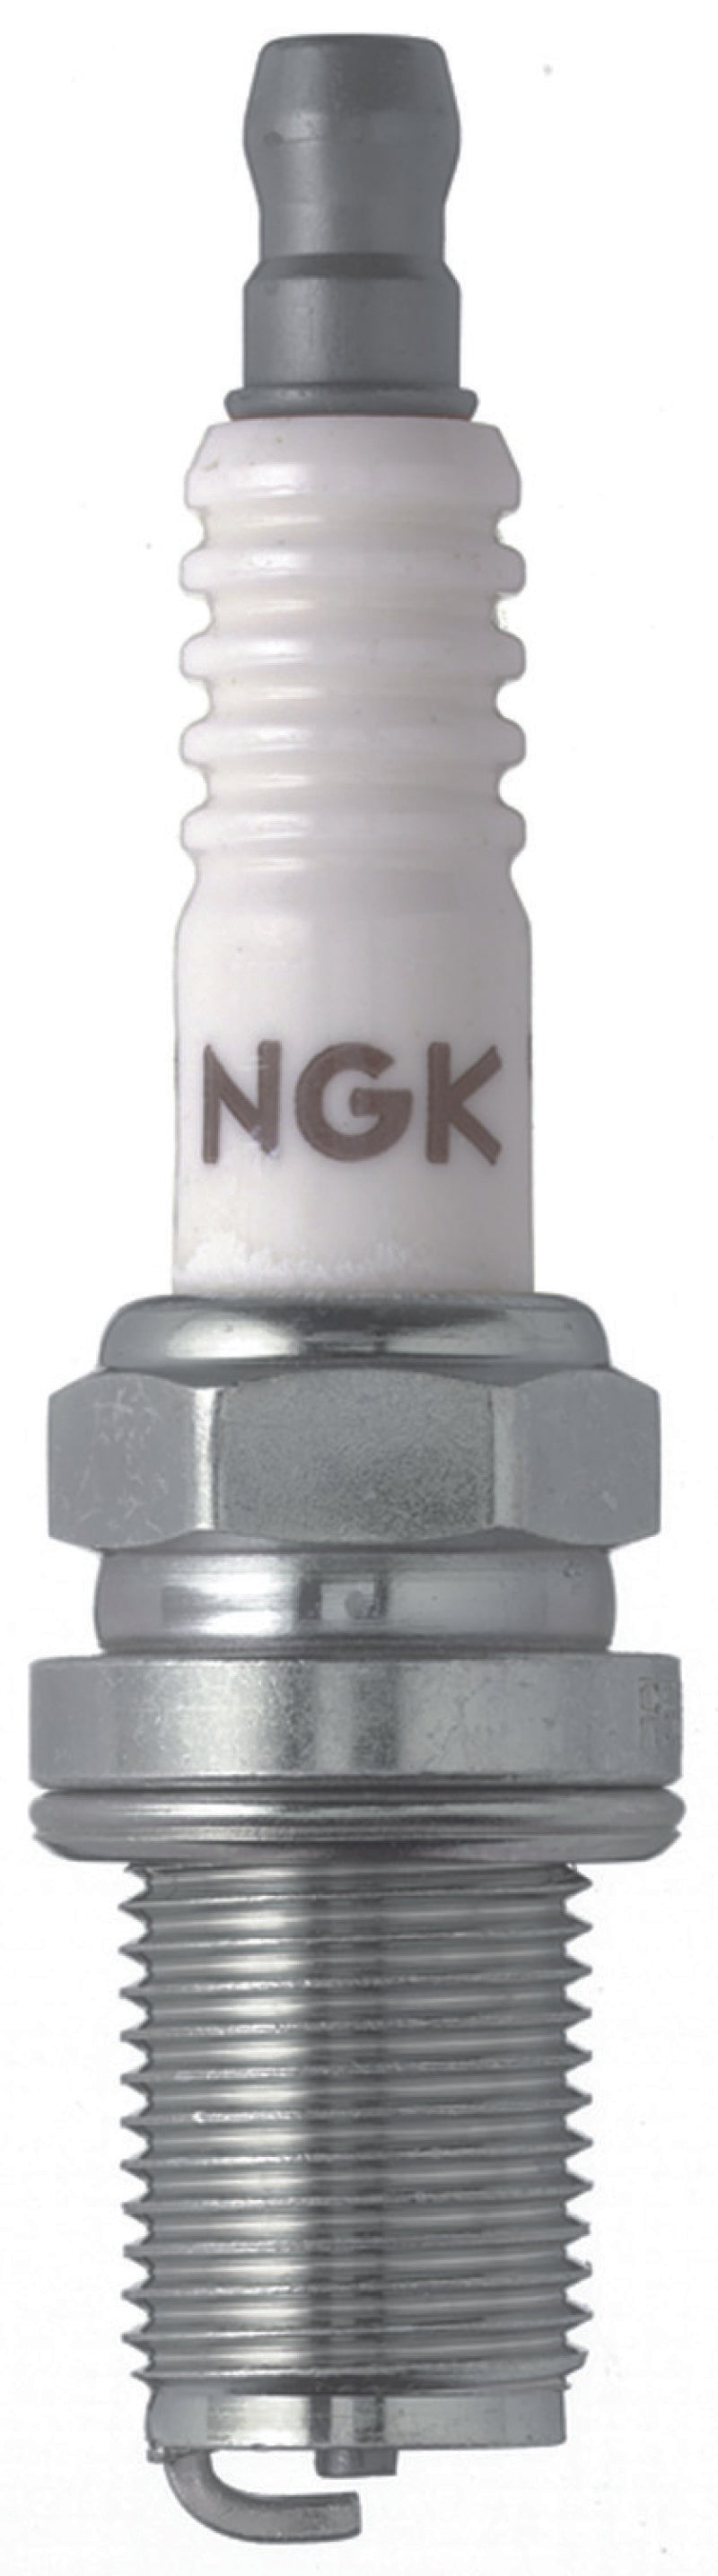 NGK Nickel Spark Plug Box of 4 (R5671A-10).